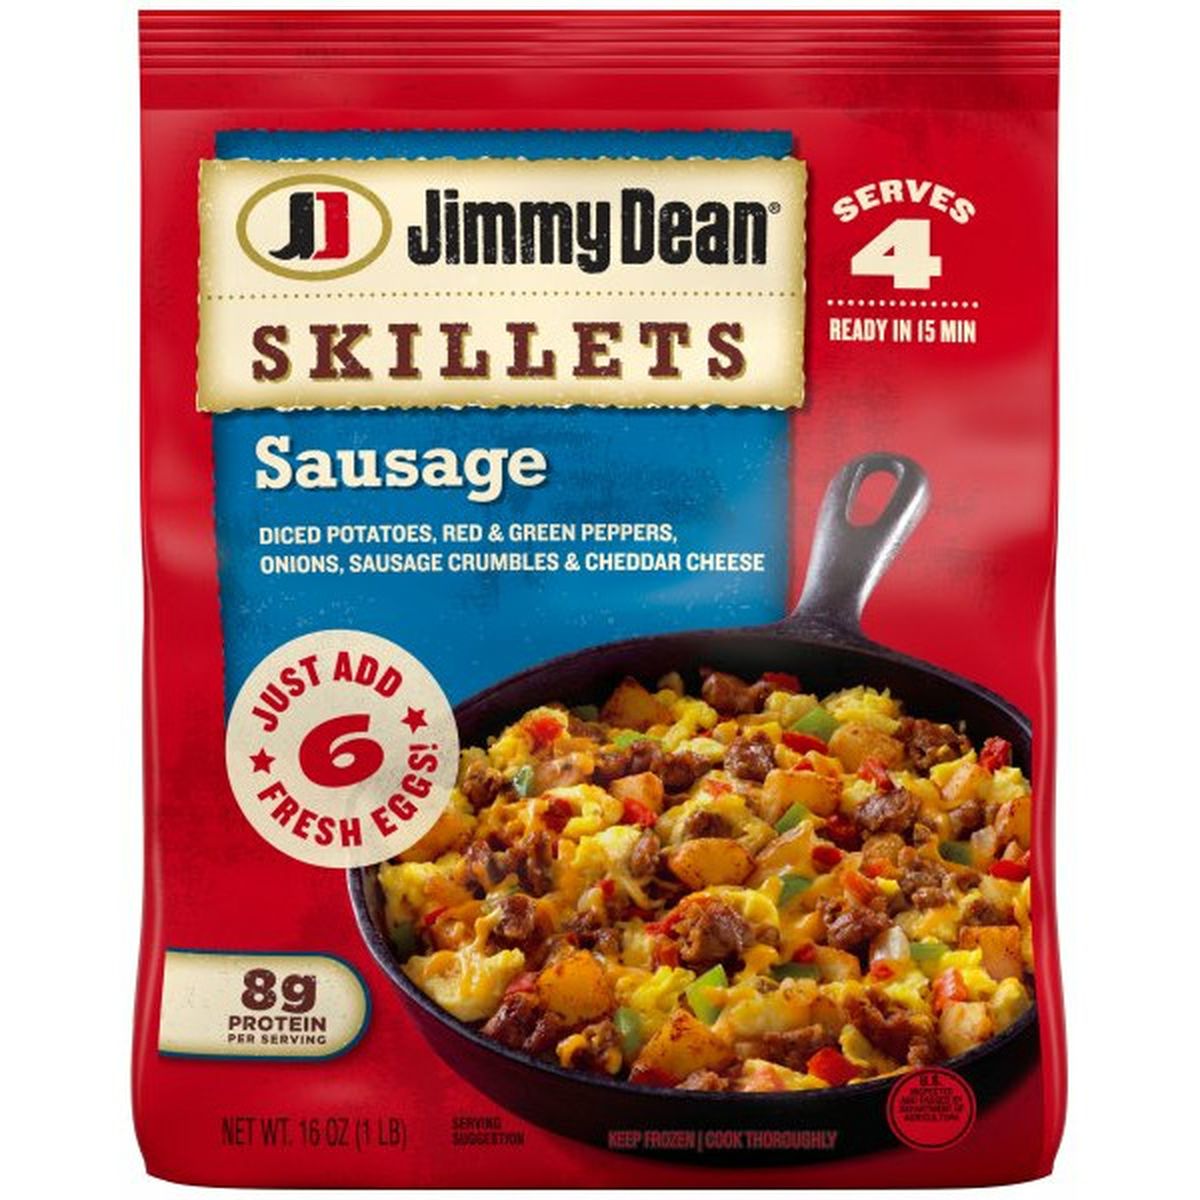 Calories in Jimmy Dean Sausage Breakfast Skillet